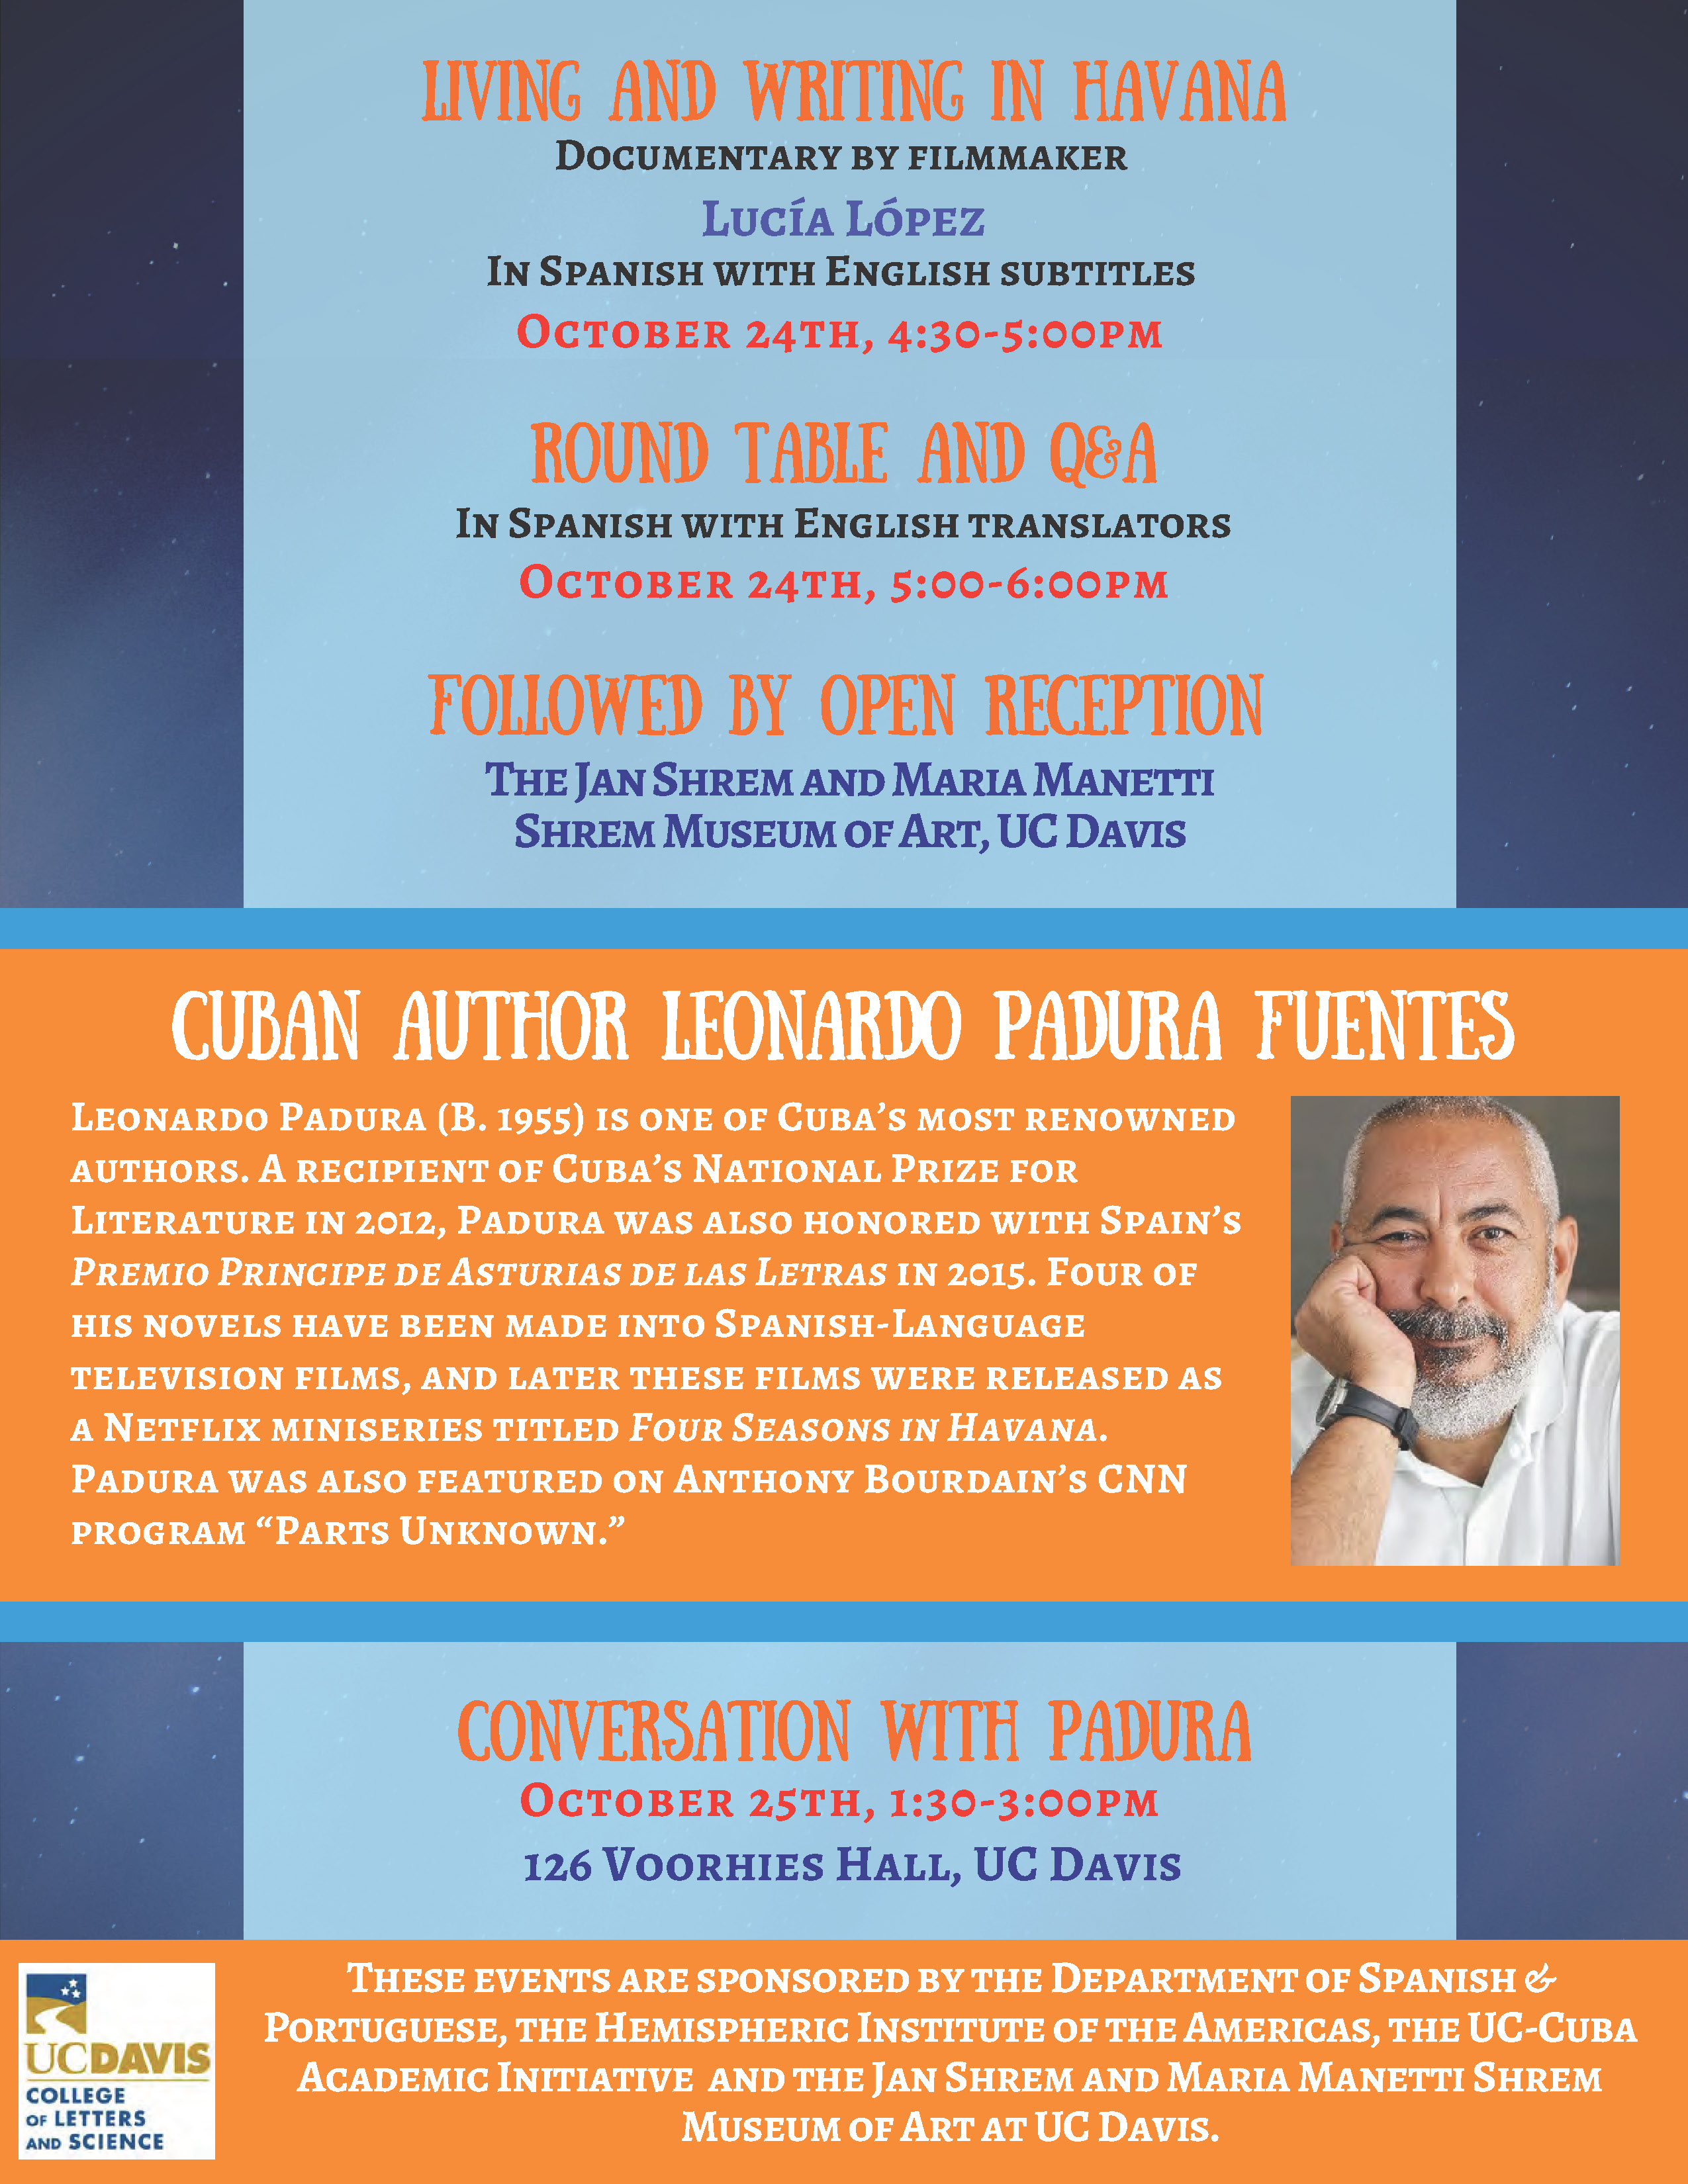 Leonardo Padura Fuentes Events